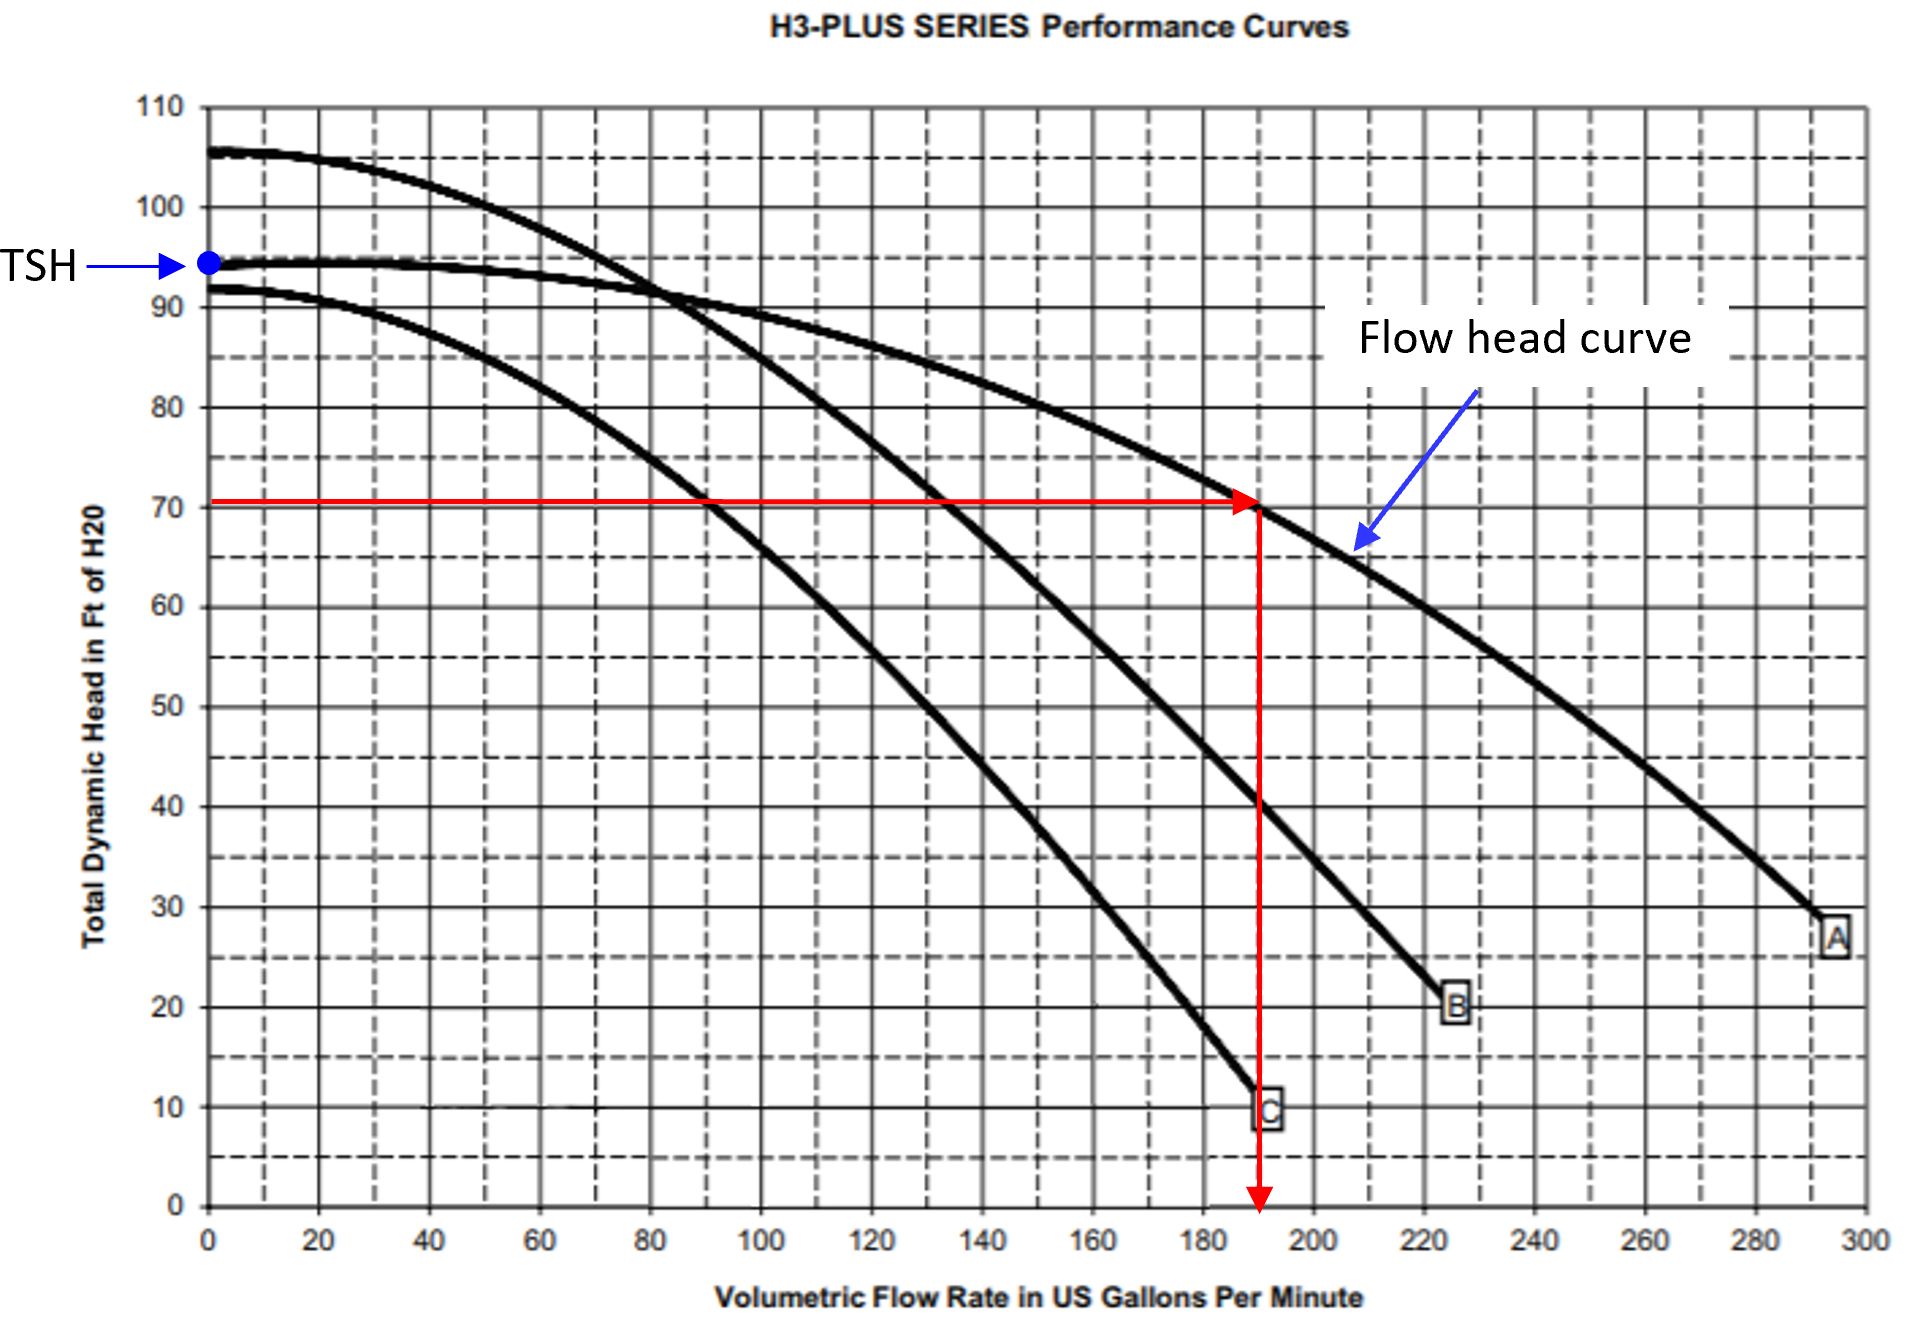 Pump performance diagram, showing flow-head curves for three pump models.